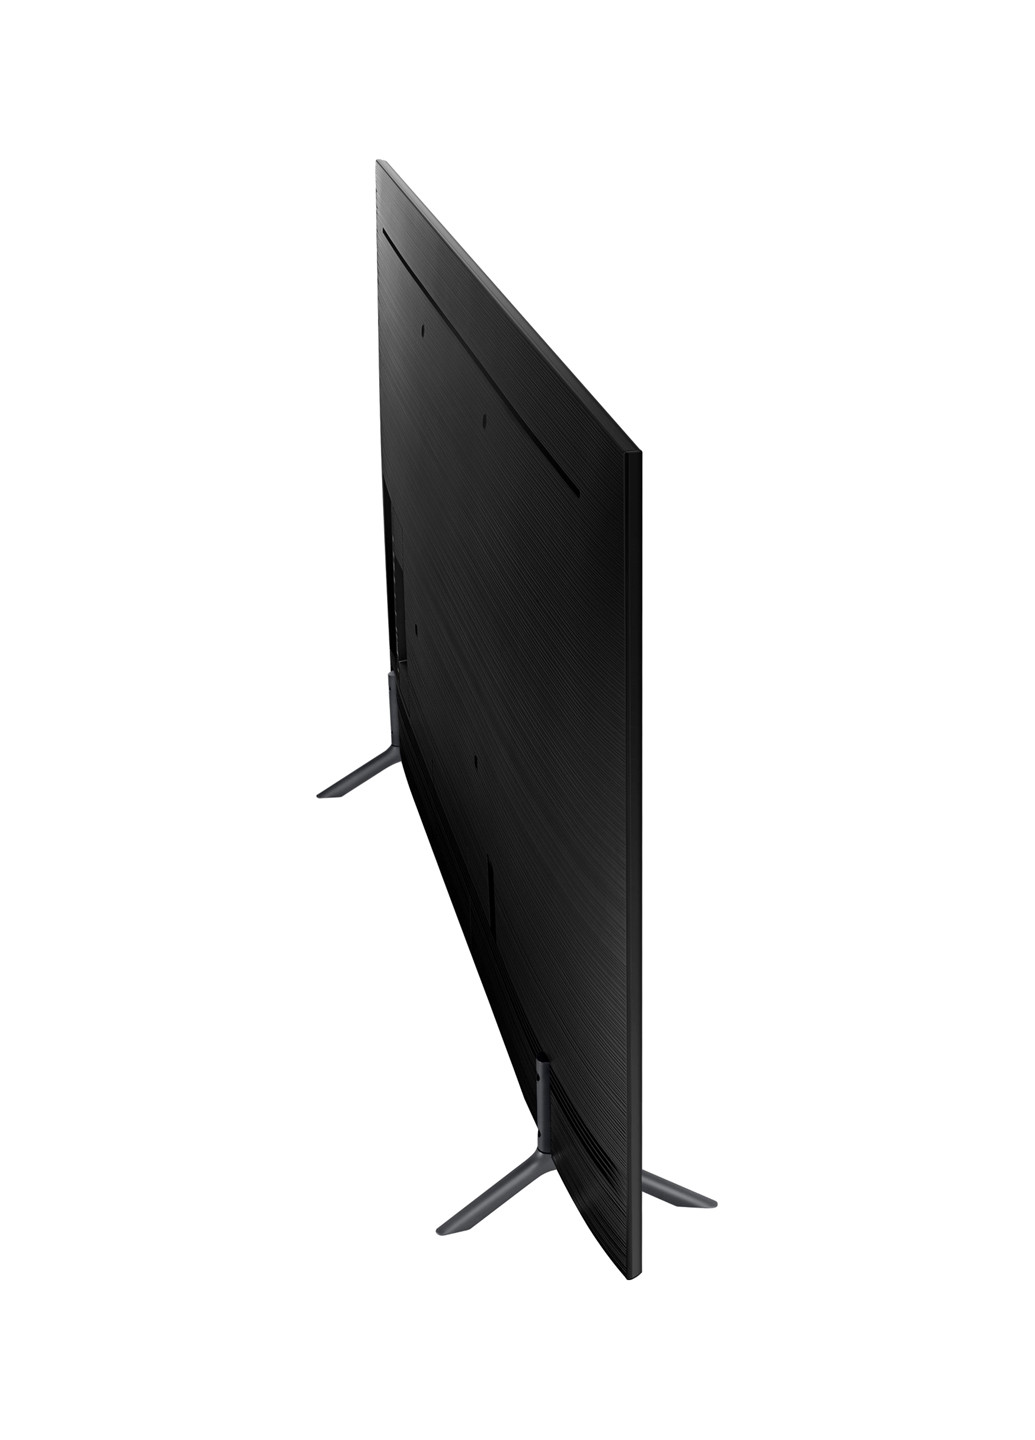 Телевизор Samsung ue65ru7100uxua (135527013)